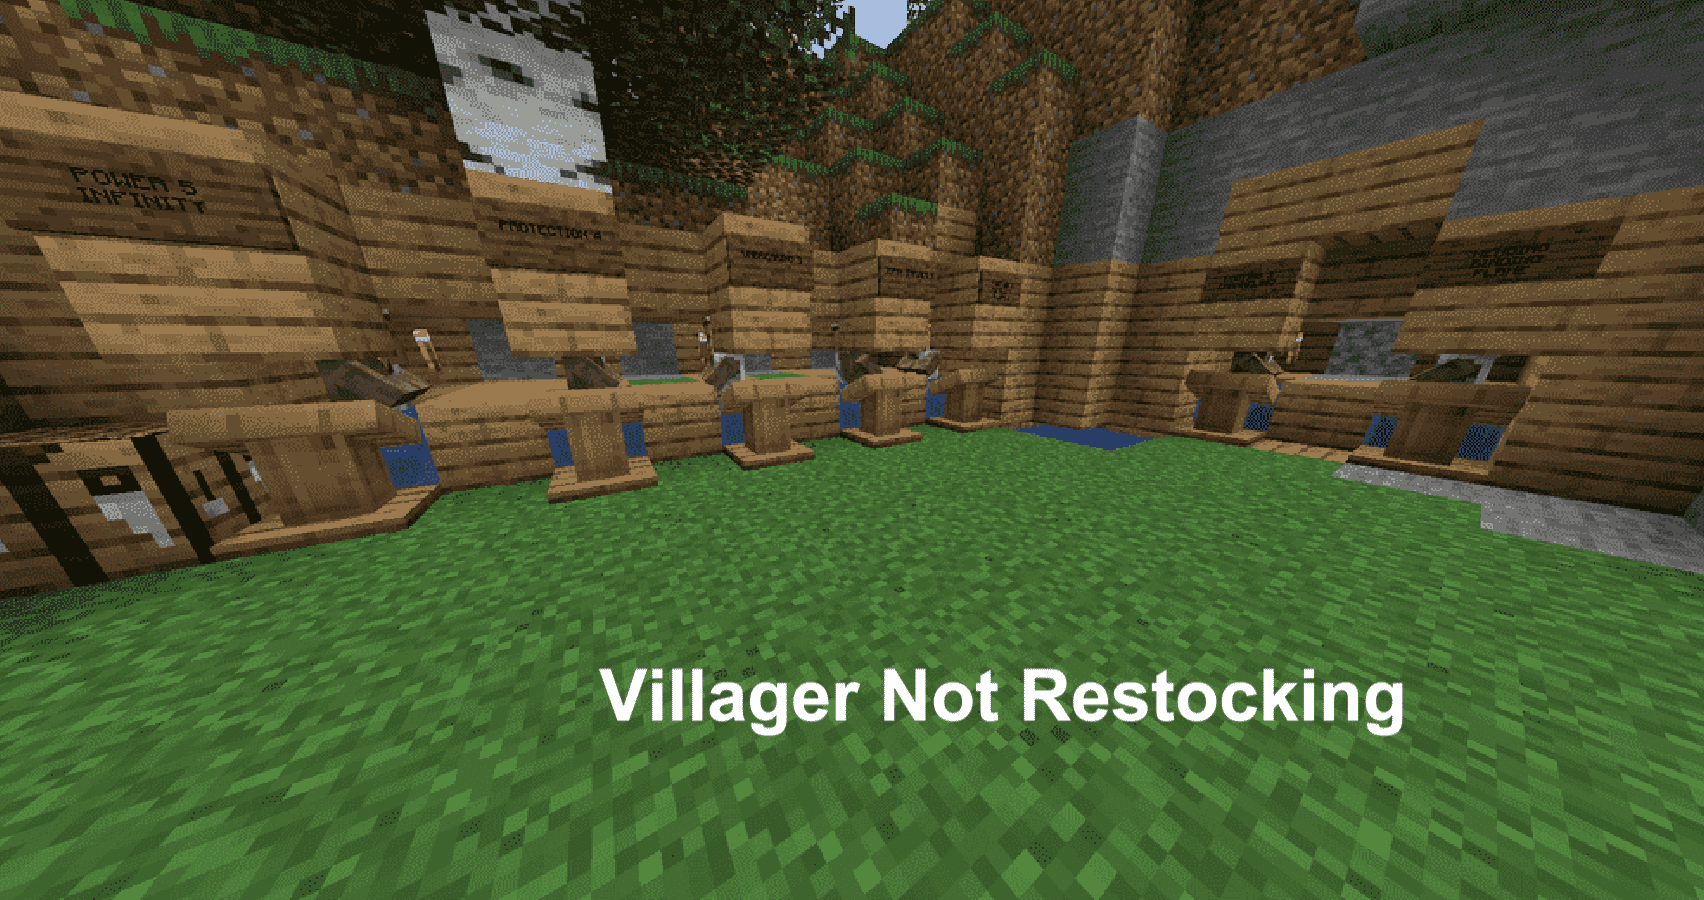 When Do Villagers Restock